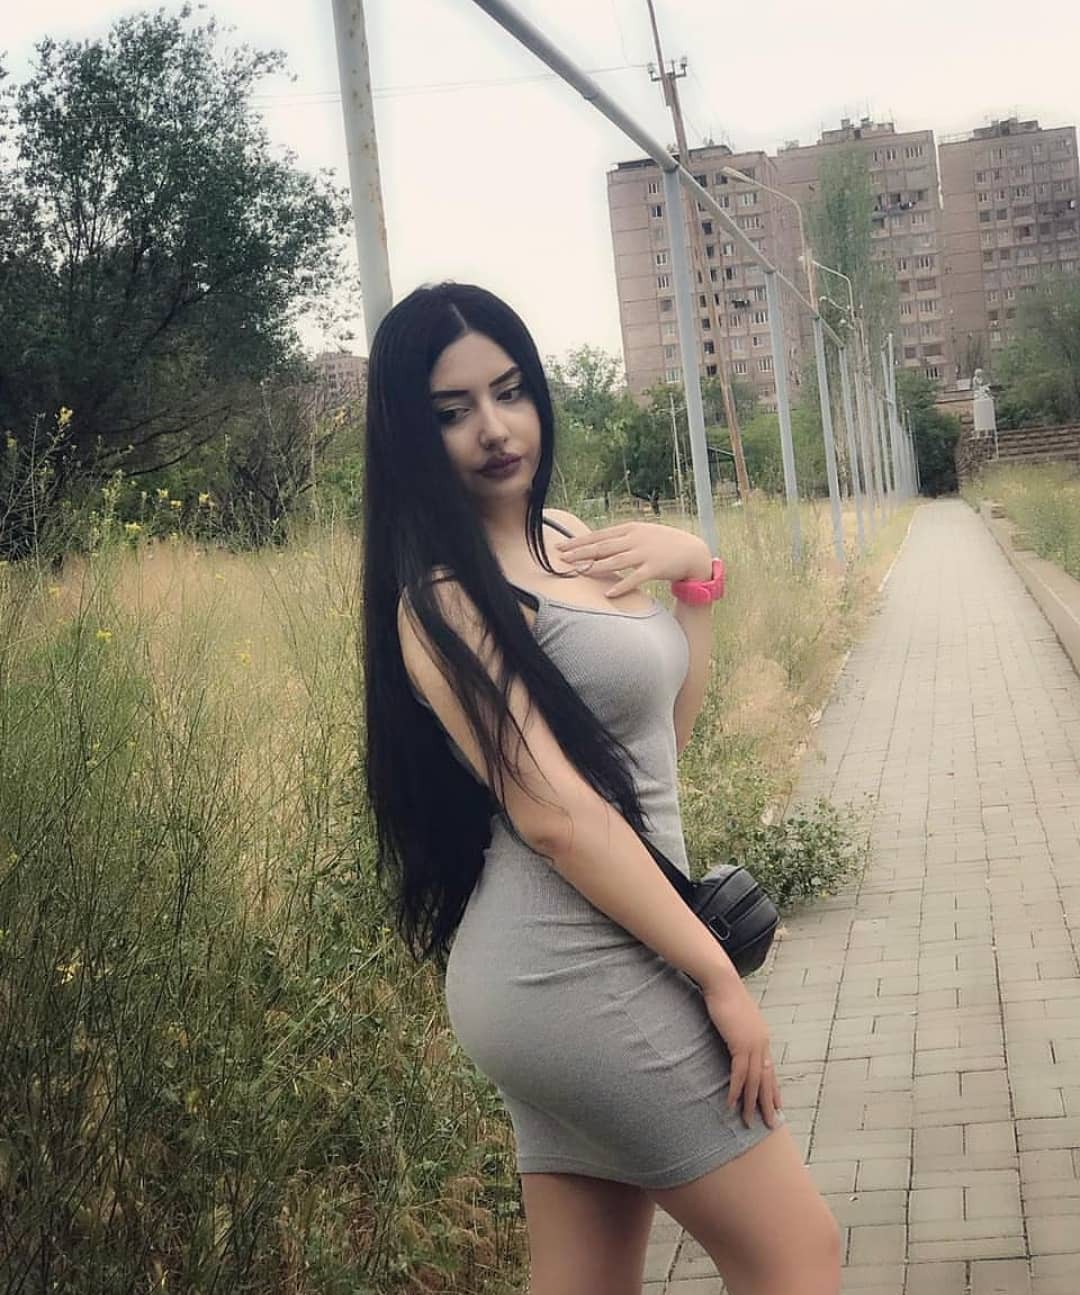 Sexy Cute Hot Girls On The Instagram, Sargis Grigoryan | Cute Hot Girls ...